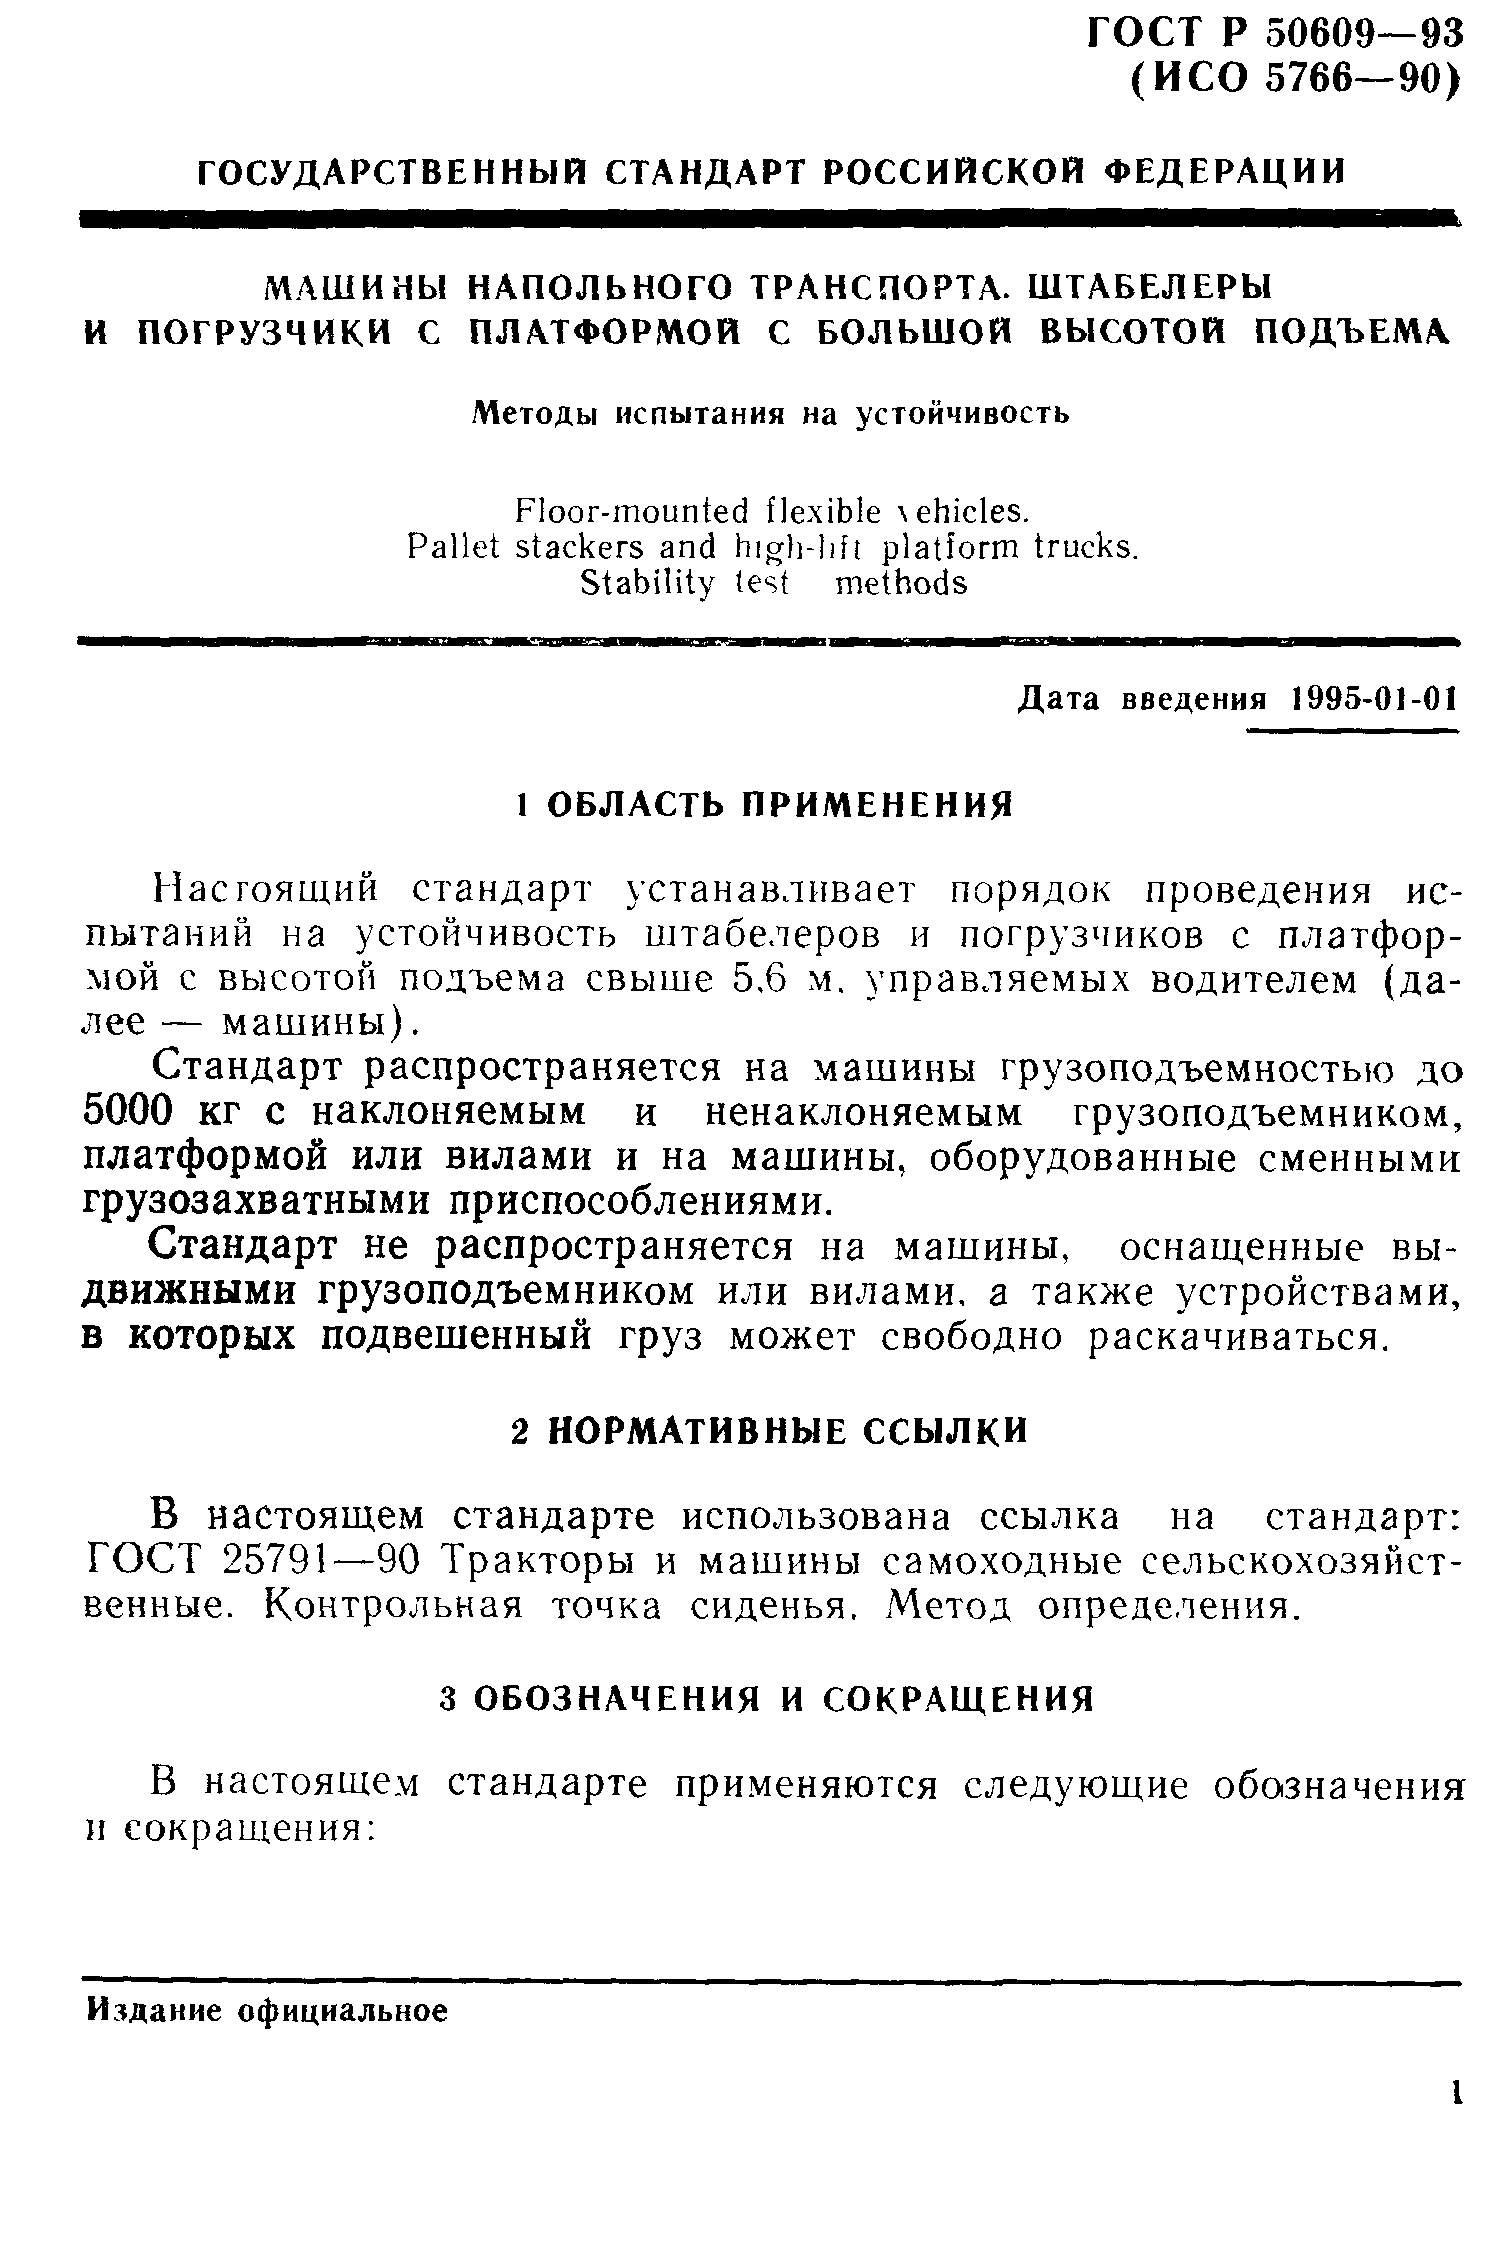 ГОСТ Р 50609-93